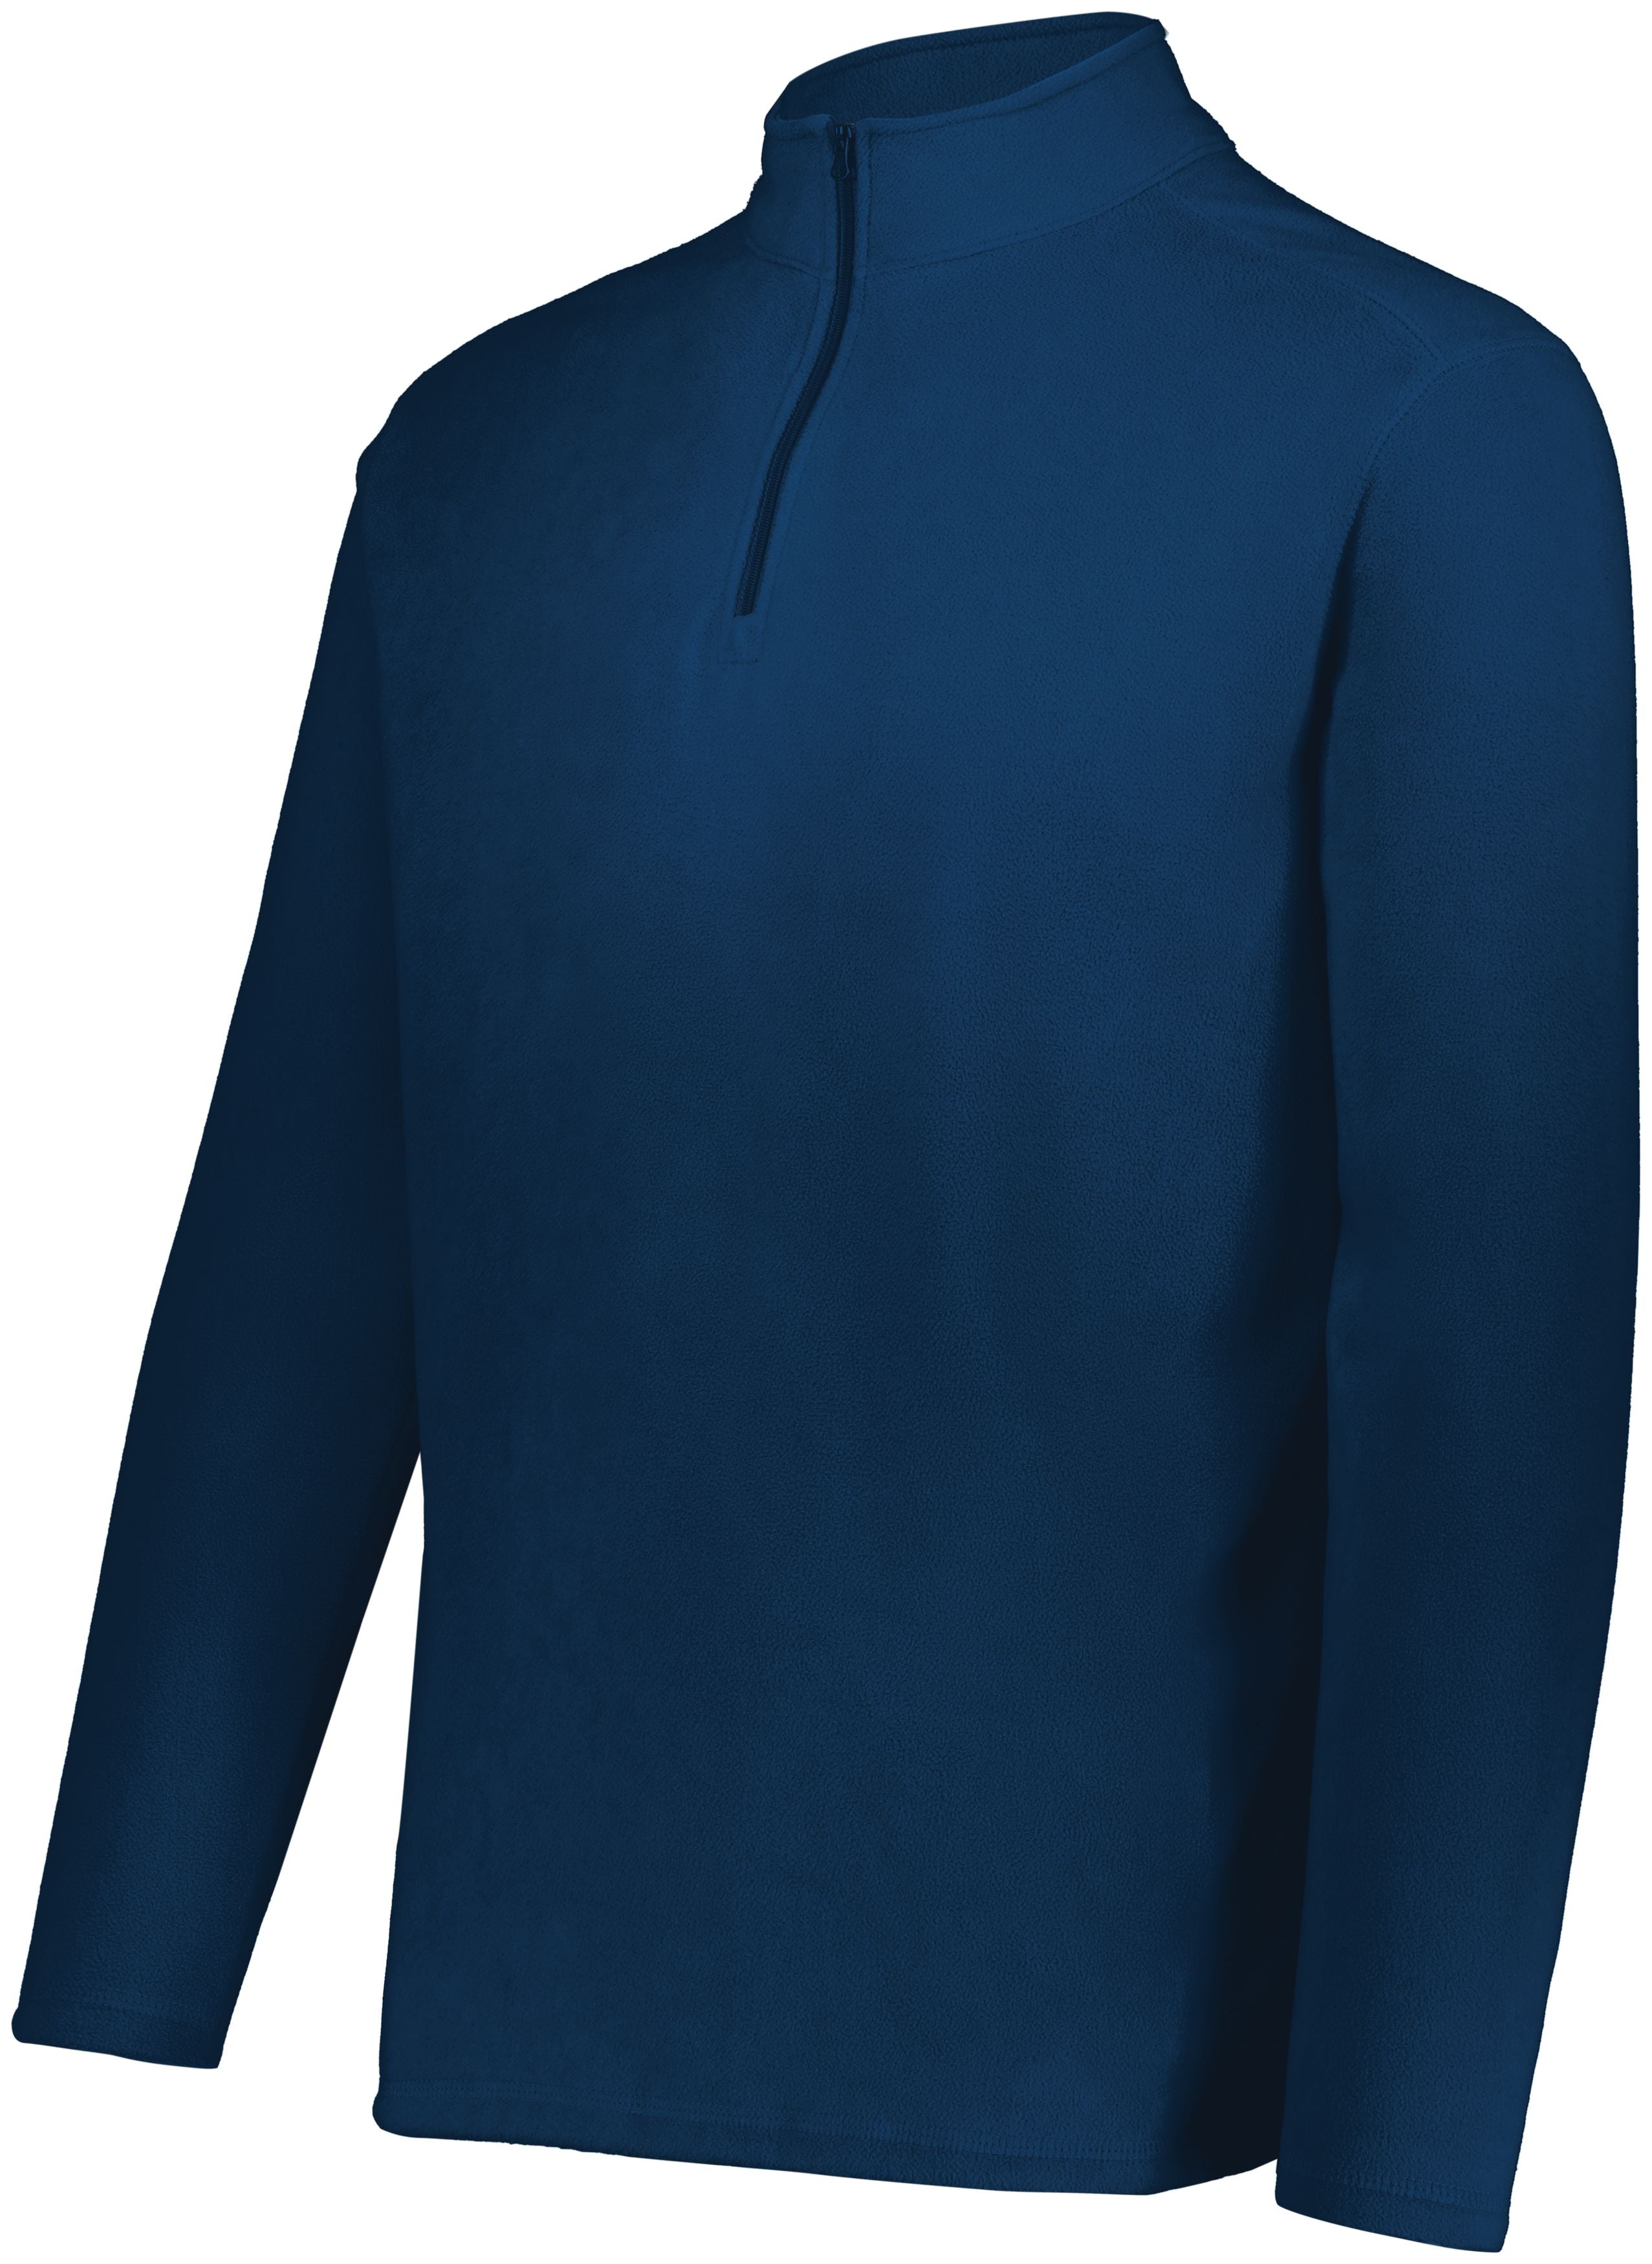 C3) 6863 Augusta Sportswear Micro-Lite Fleece 1/4 Zip Pullover - OILQUICK